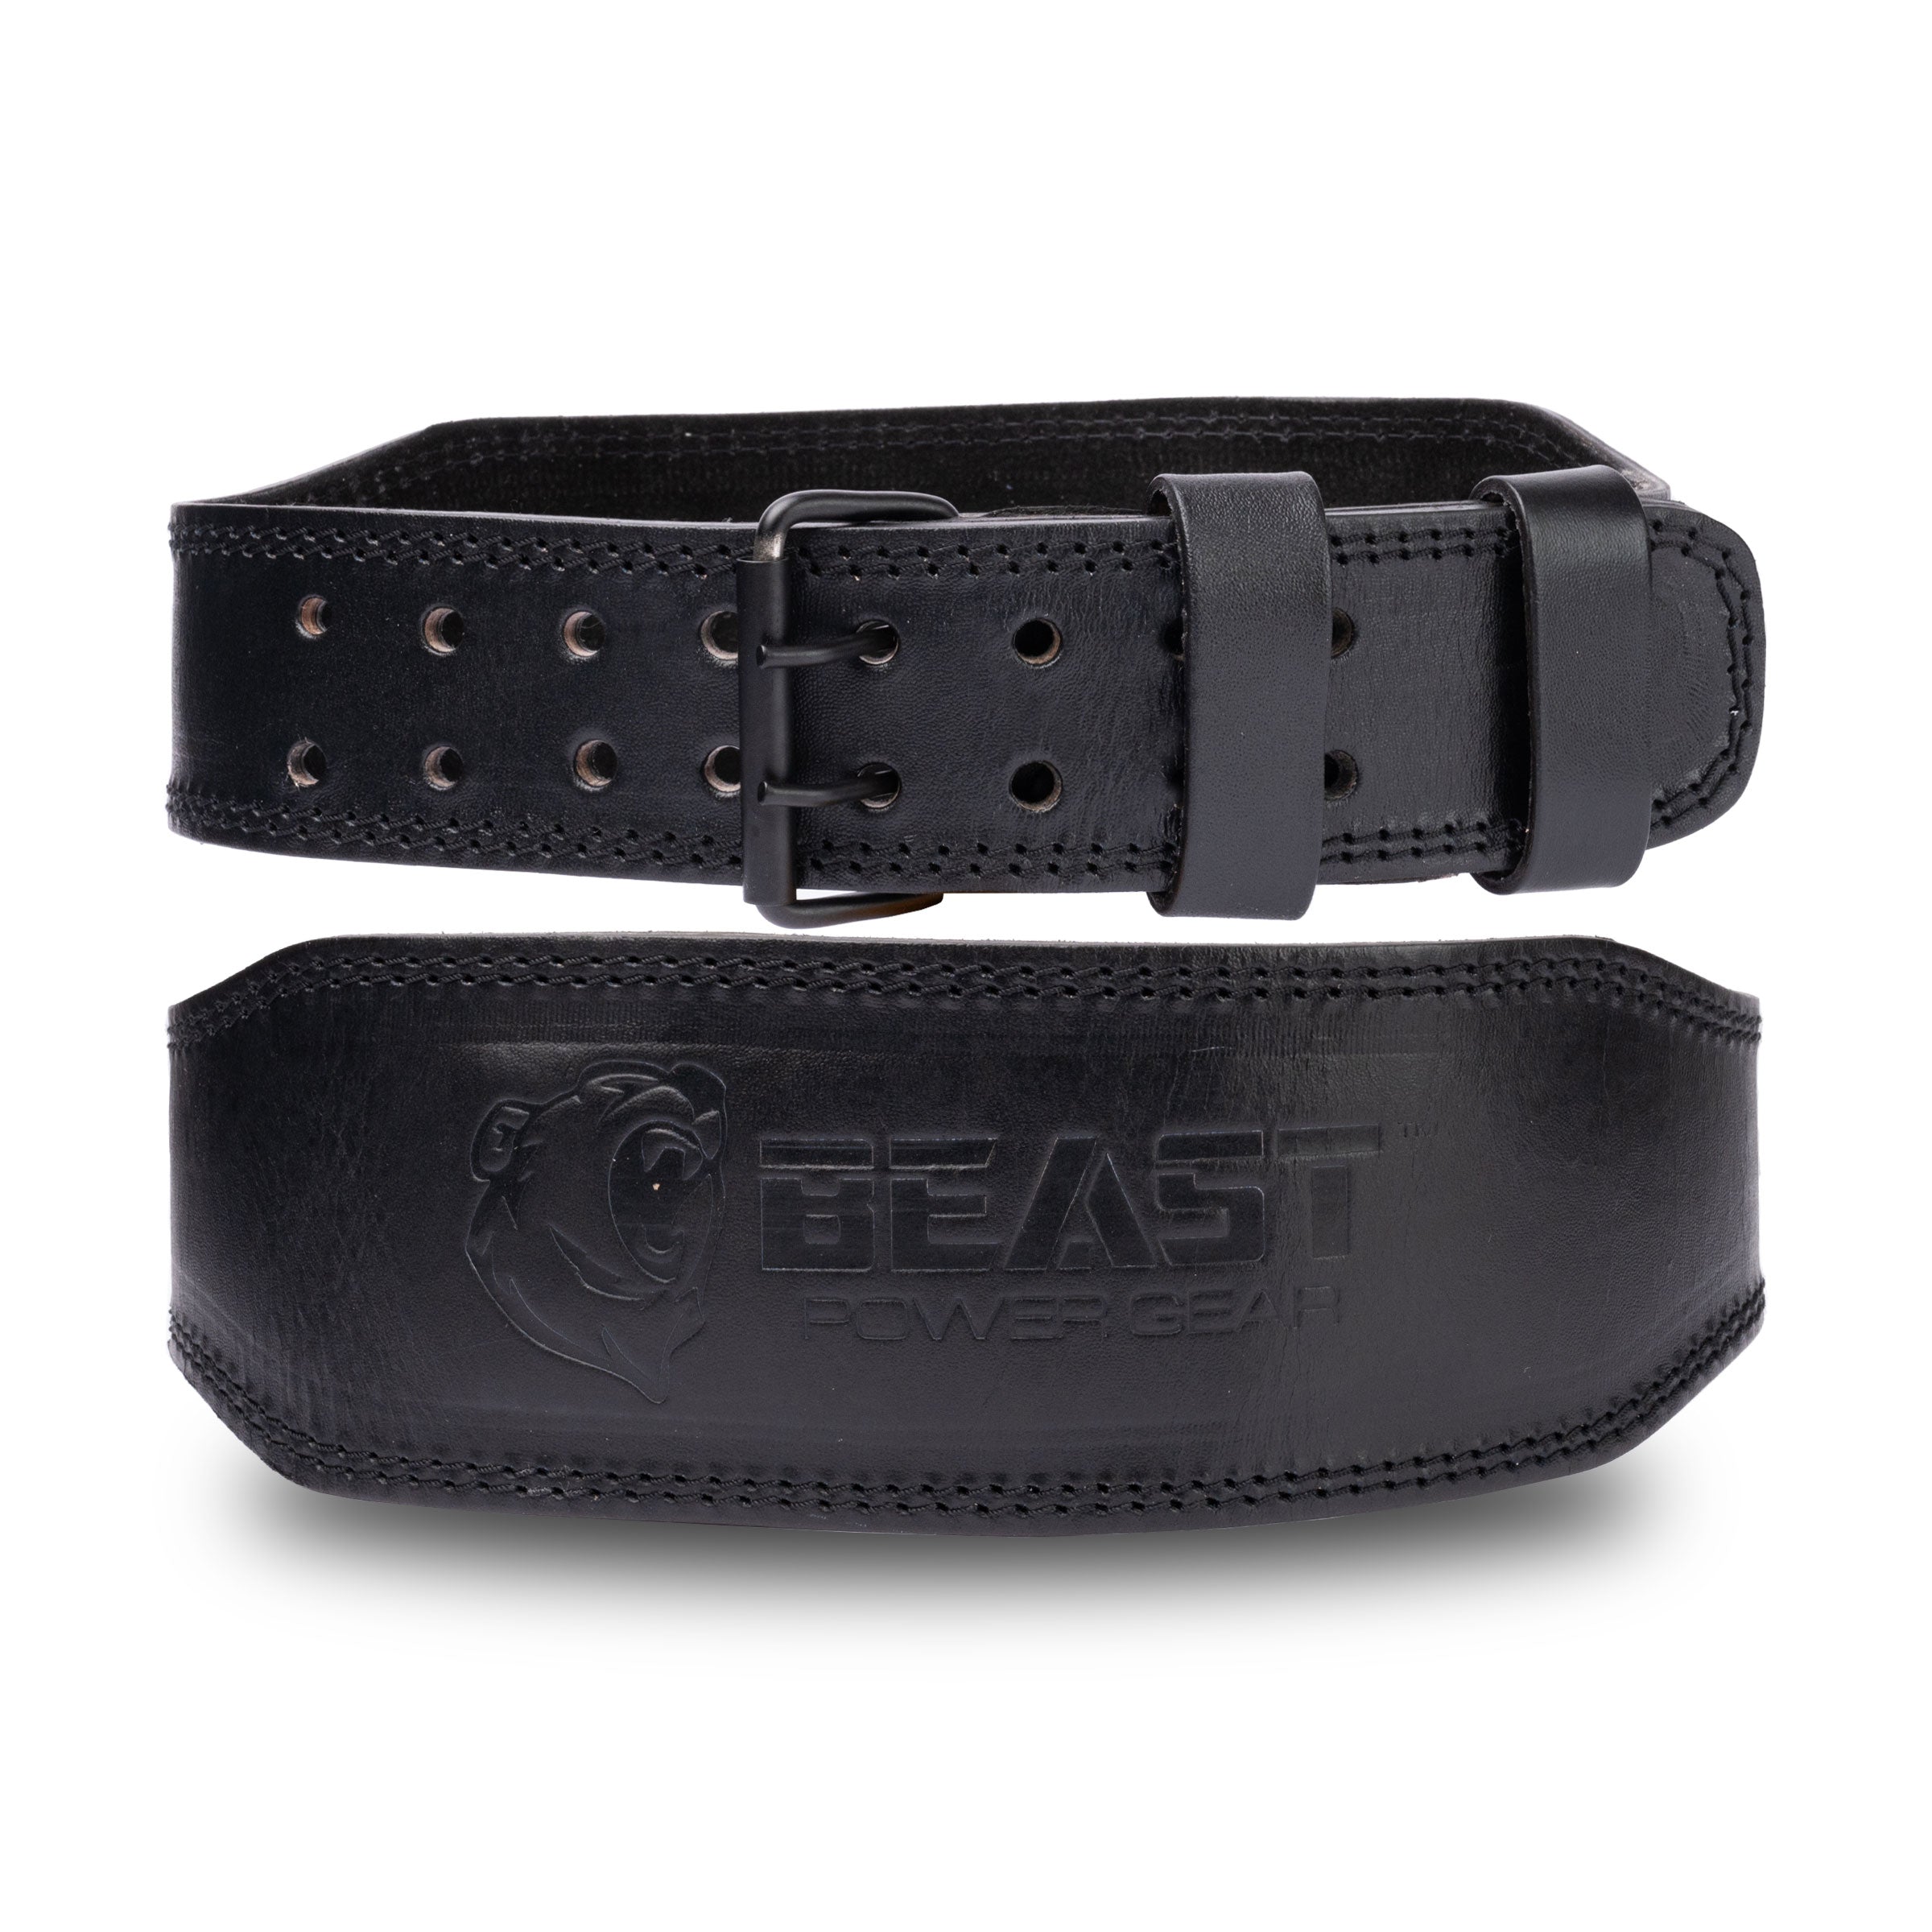 Buy Beast Gear Weight Lifting Belt for Women & Men - Leather